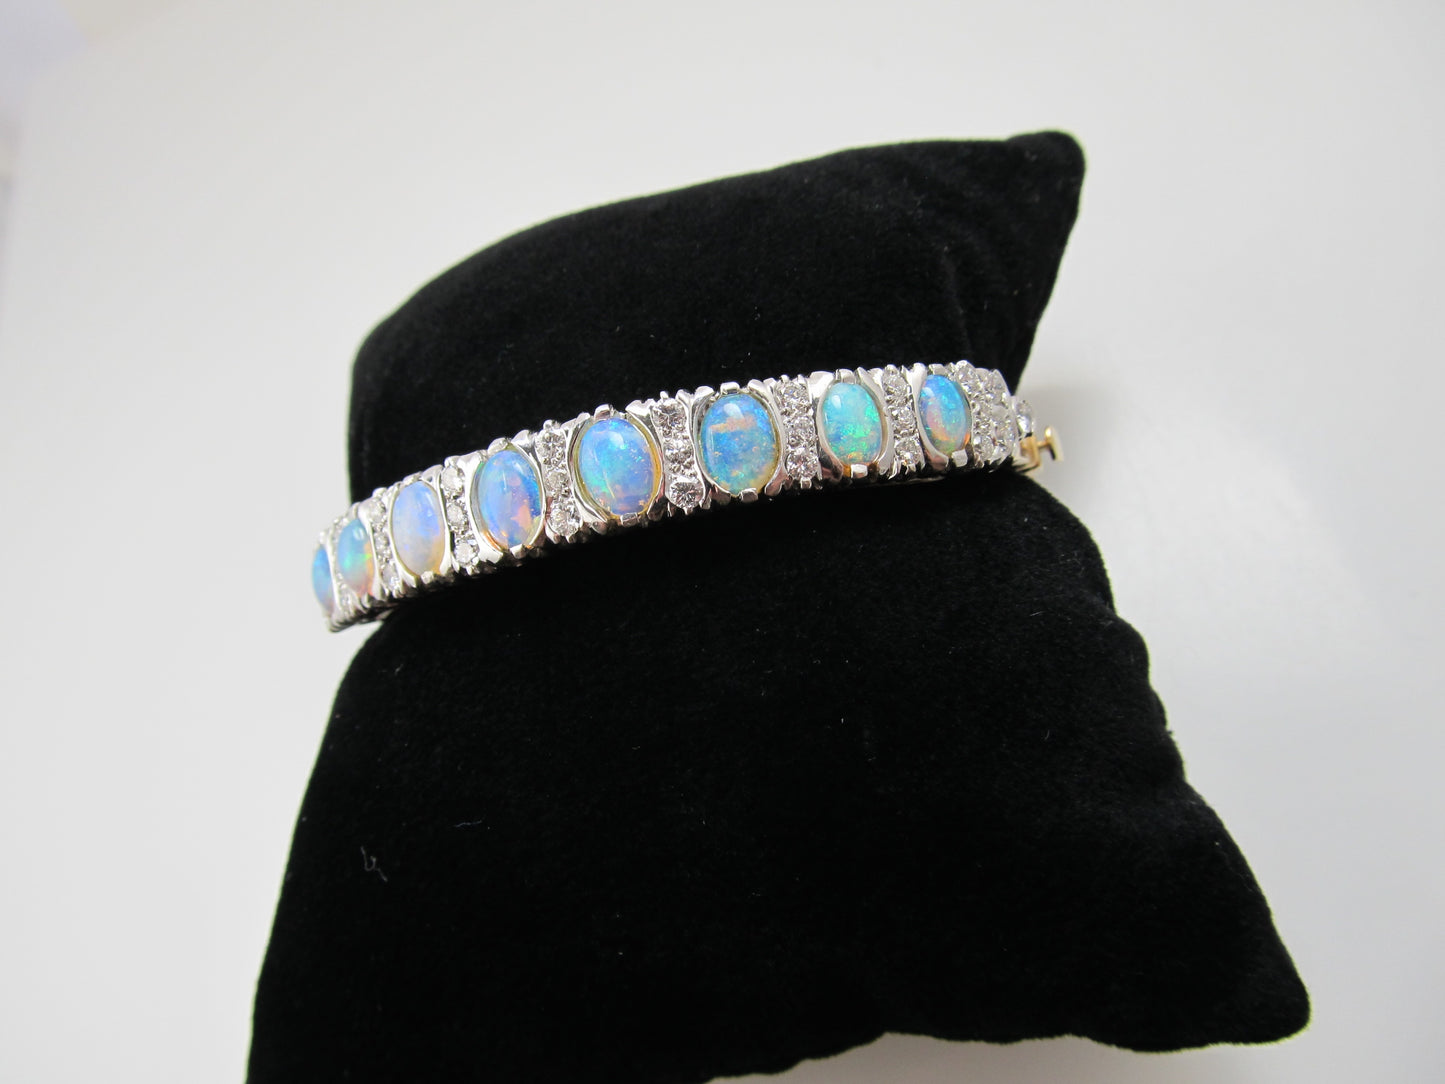 Outstanding vintage 3.00ct opal diamond bangle bracelet